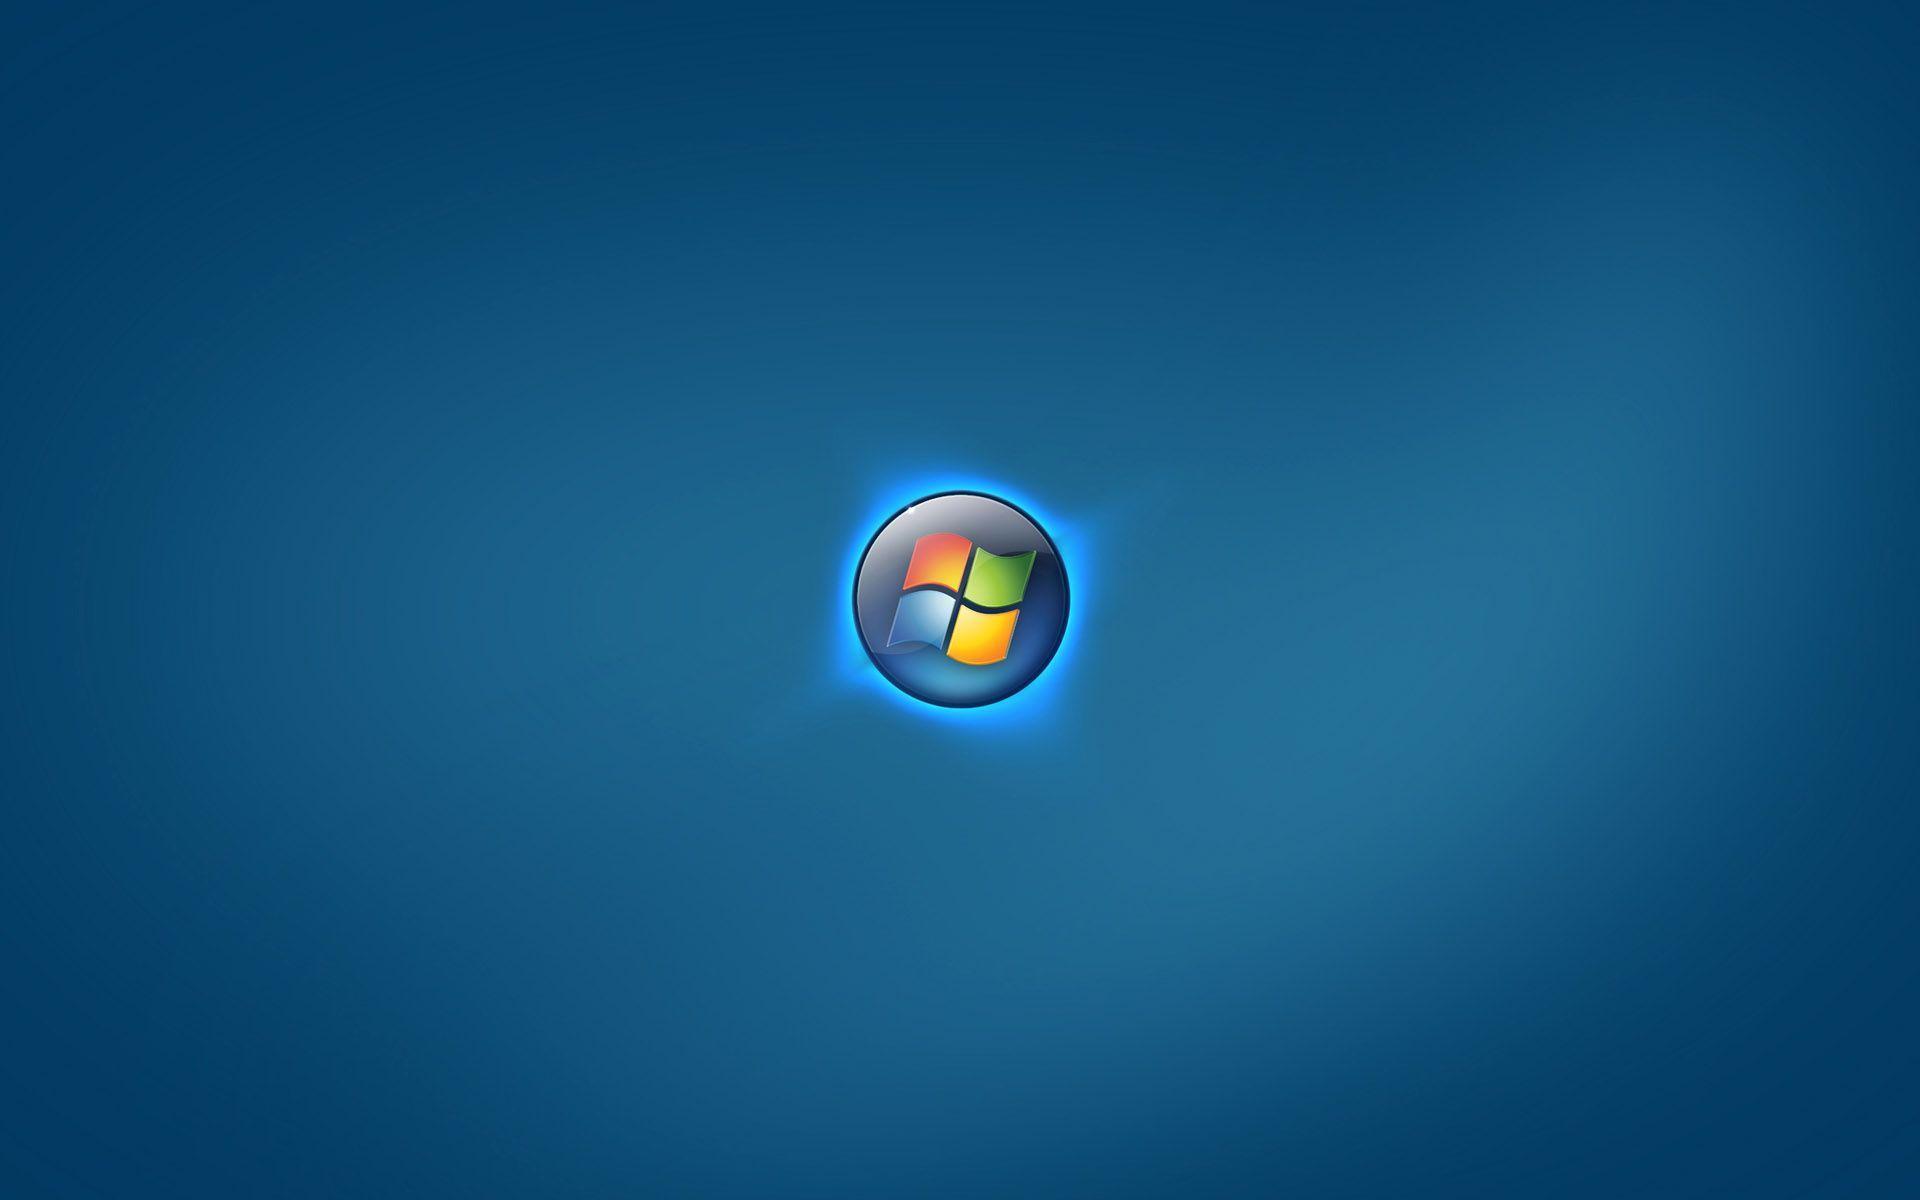 Blue Windows 7 wallpaper